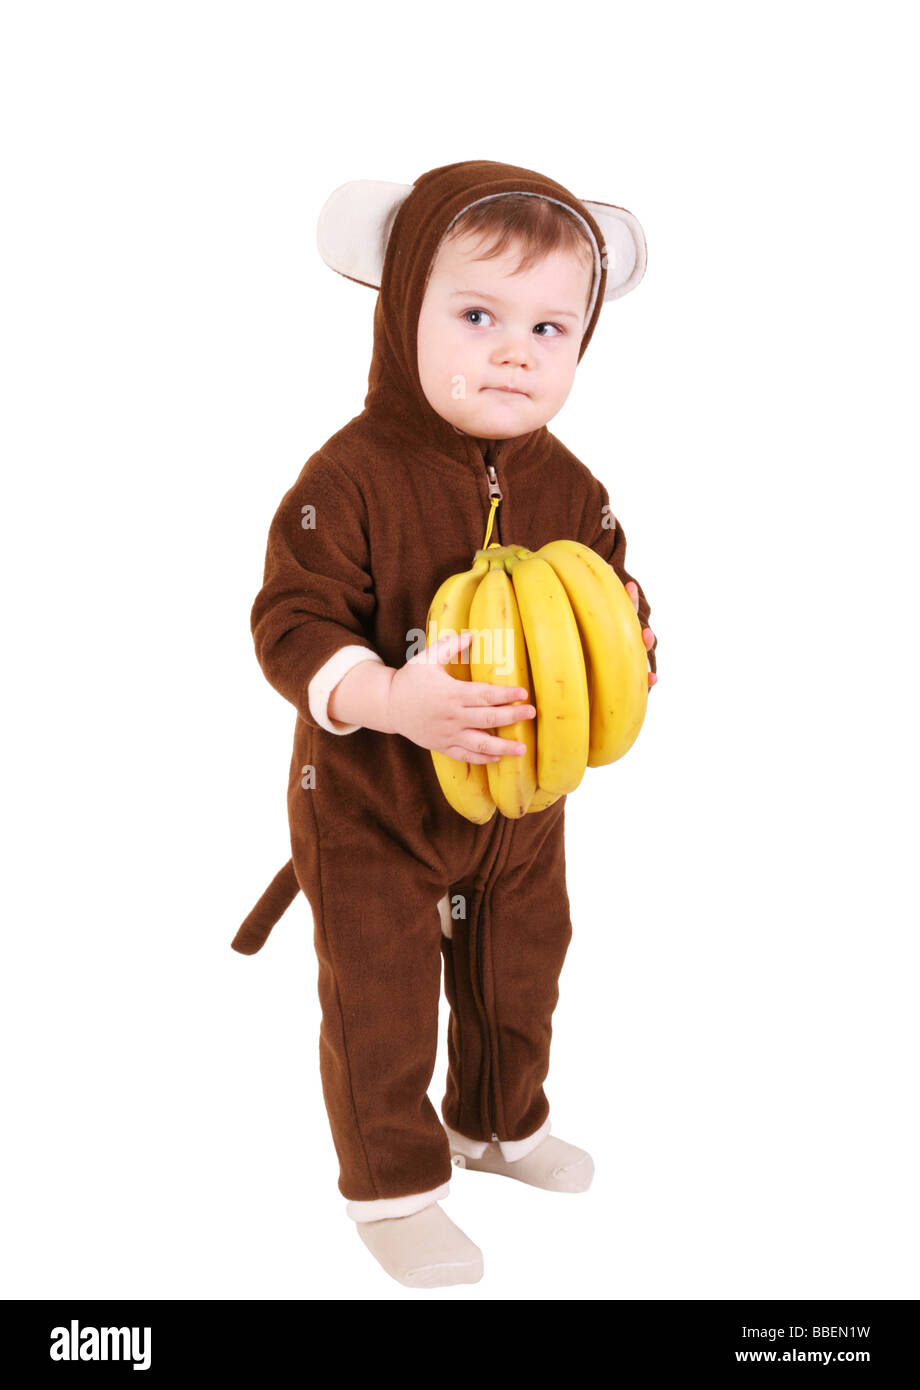 Banana Costume High Resolution Stock Photography and Images - Alamy